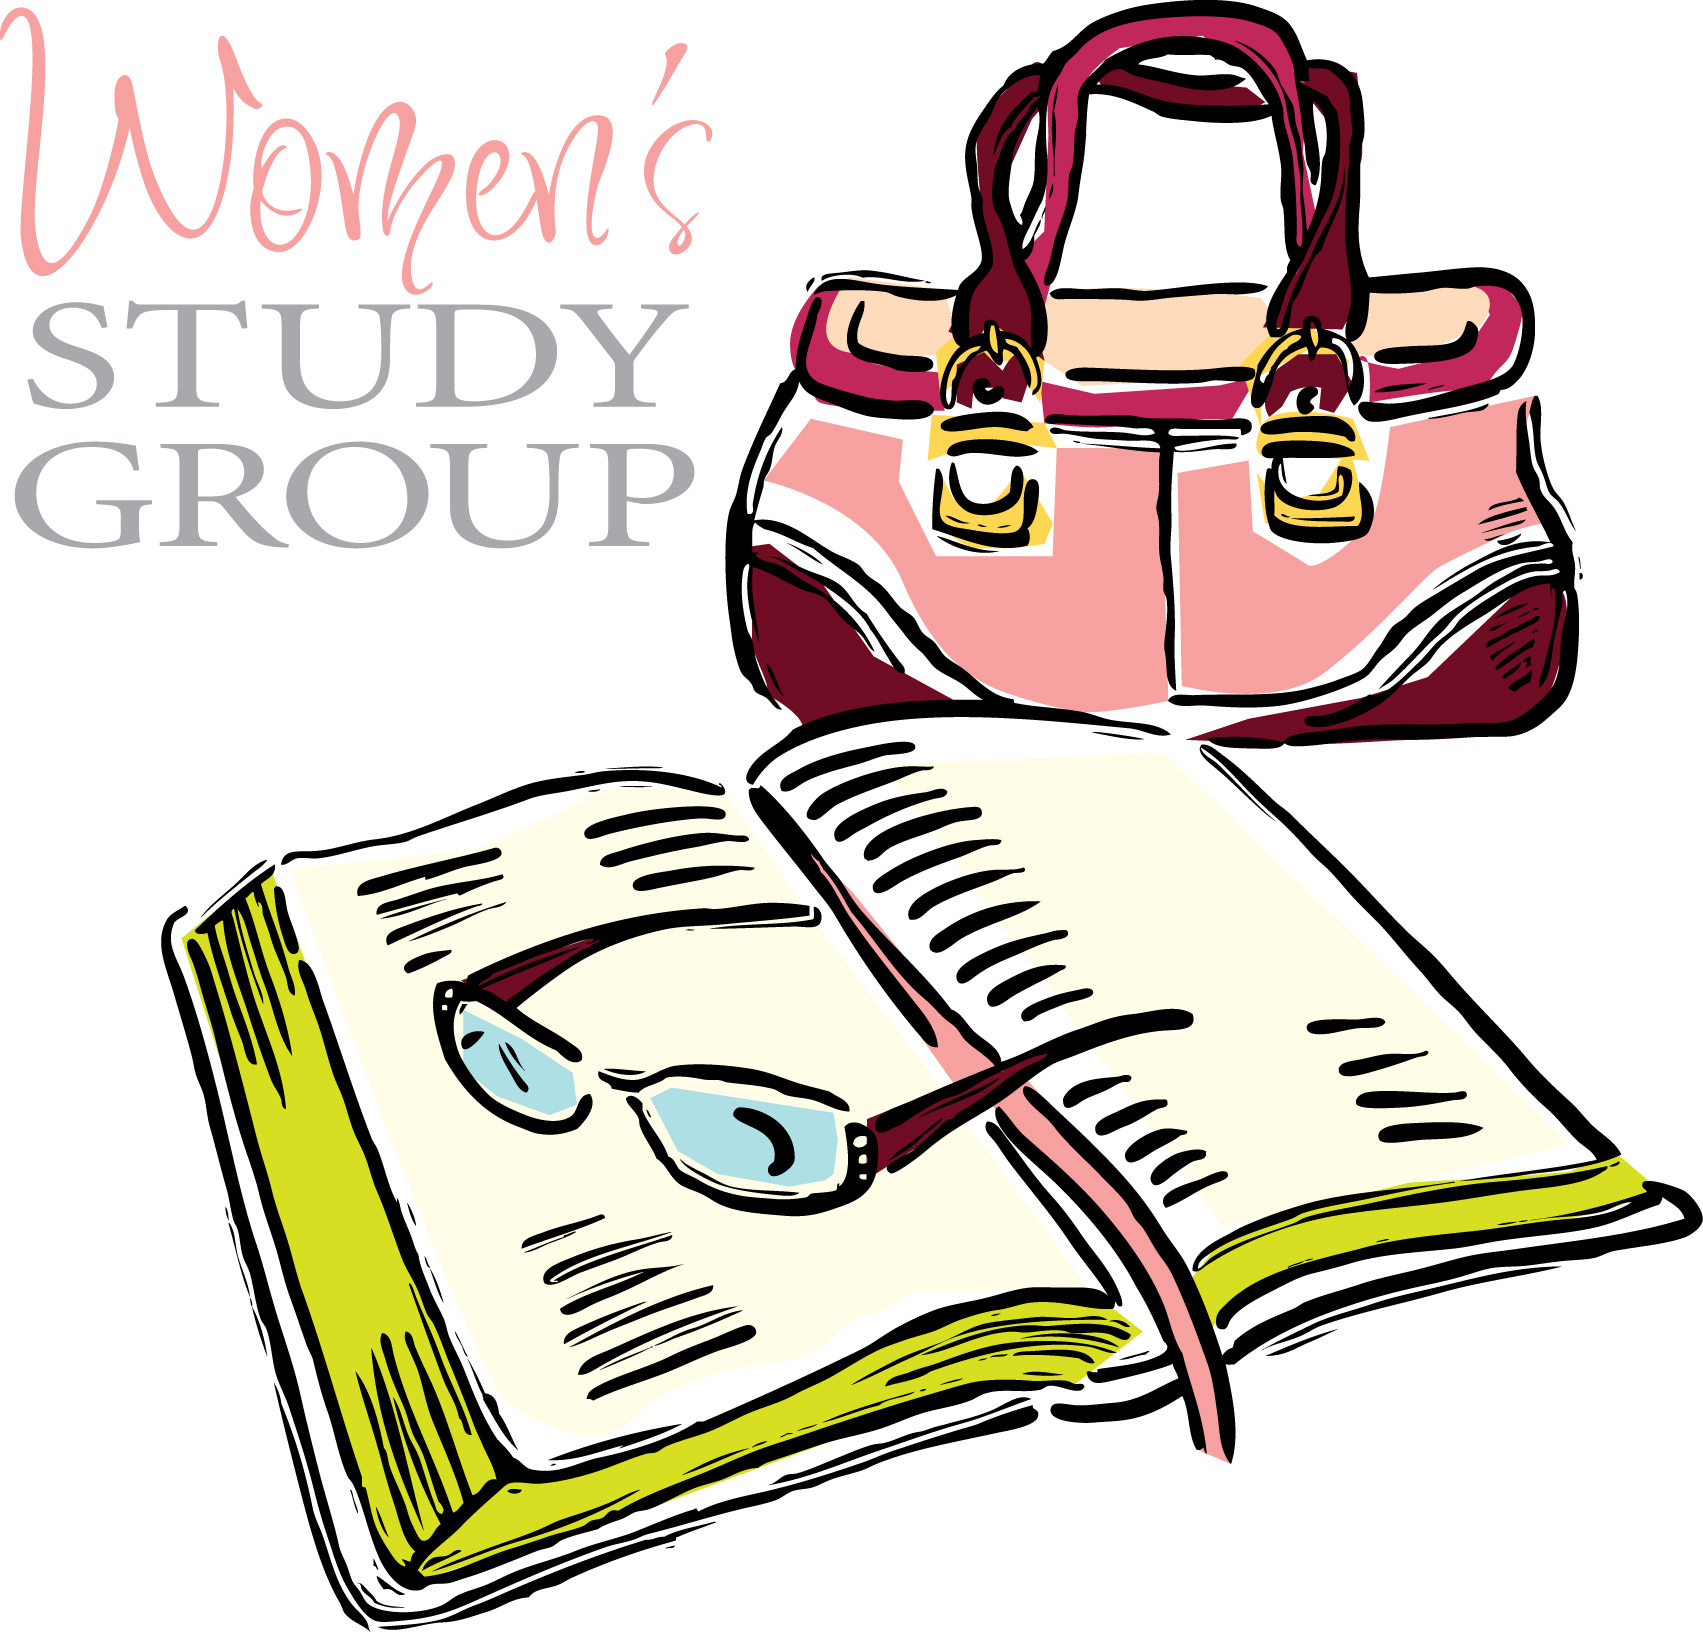 Women S Study Group   Clipart   Pinterest